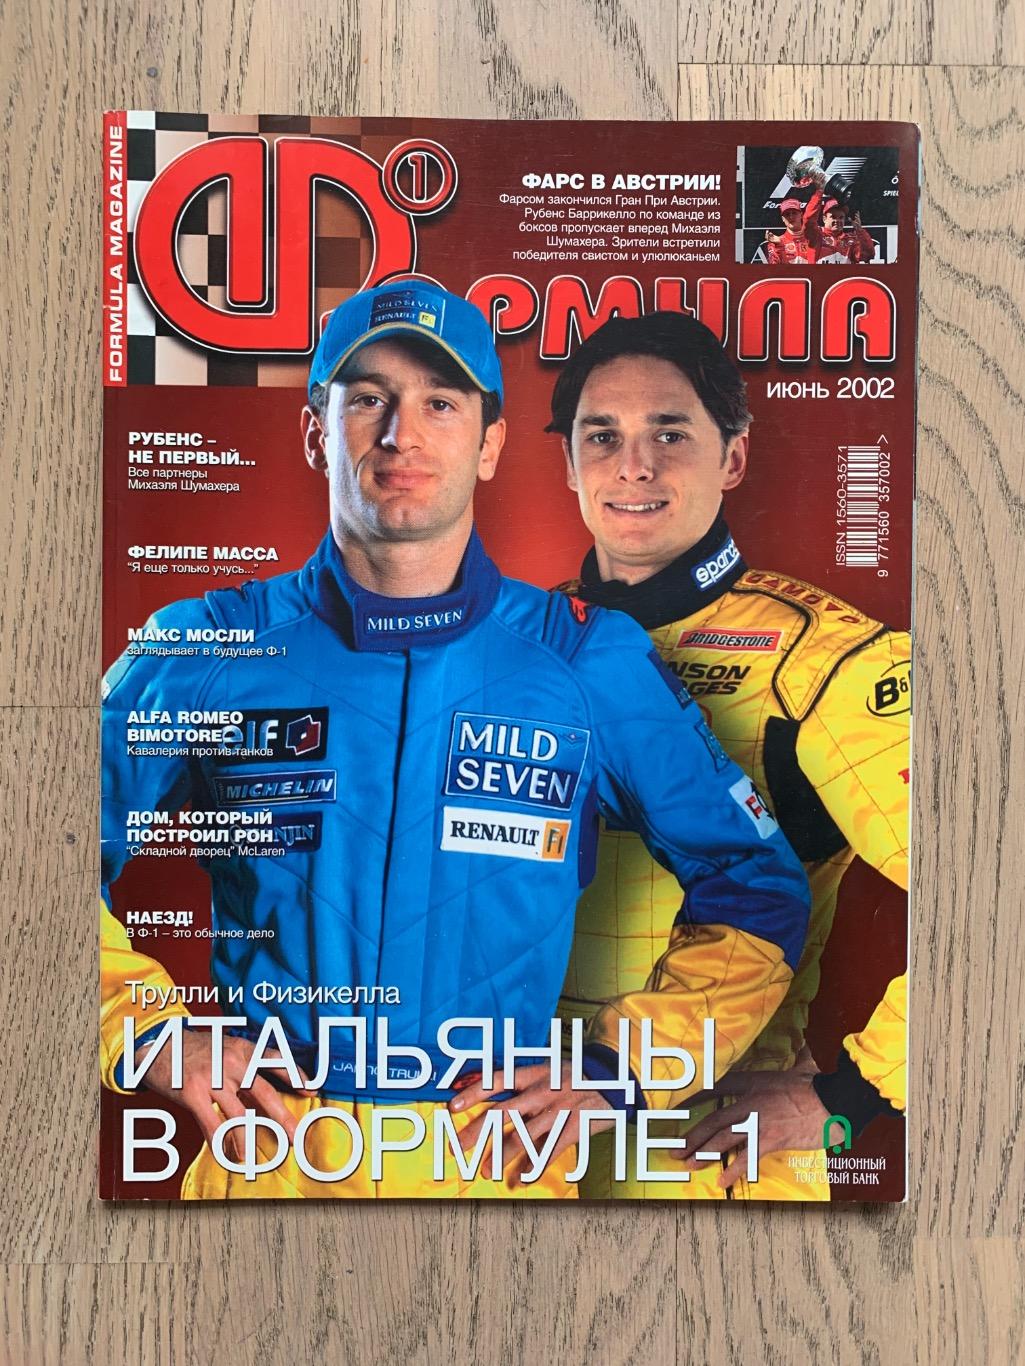 Журнал Формула 1 (Formula Magazine) / июнь 2002